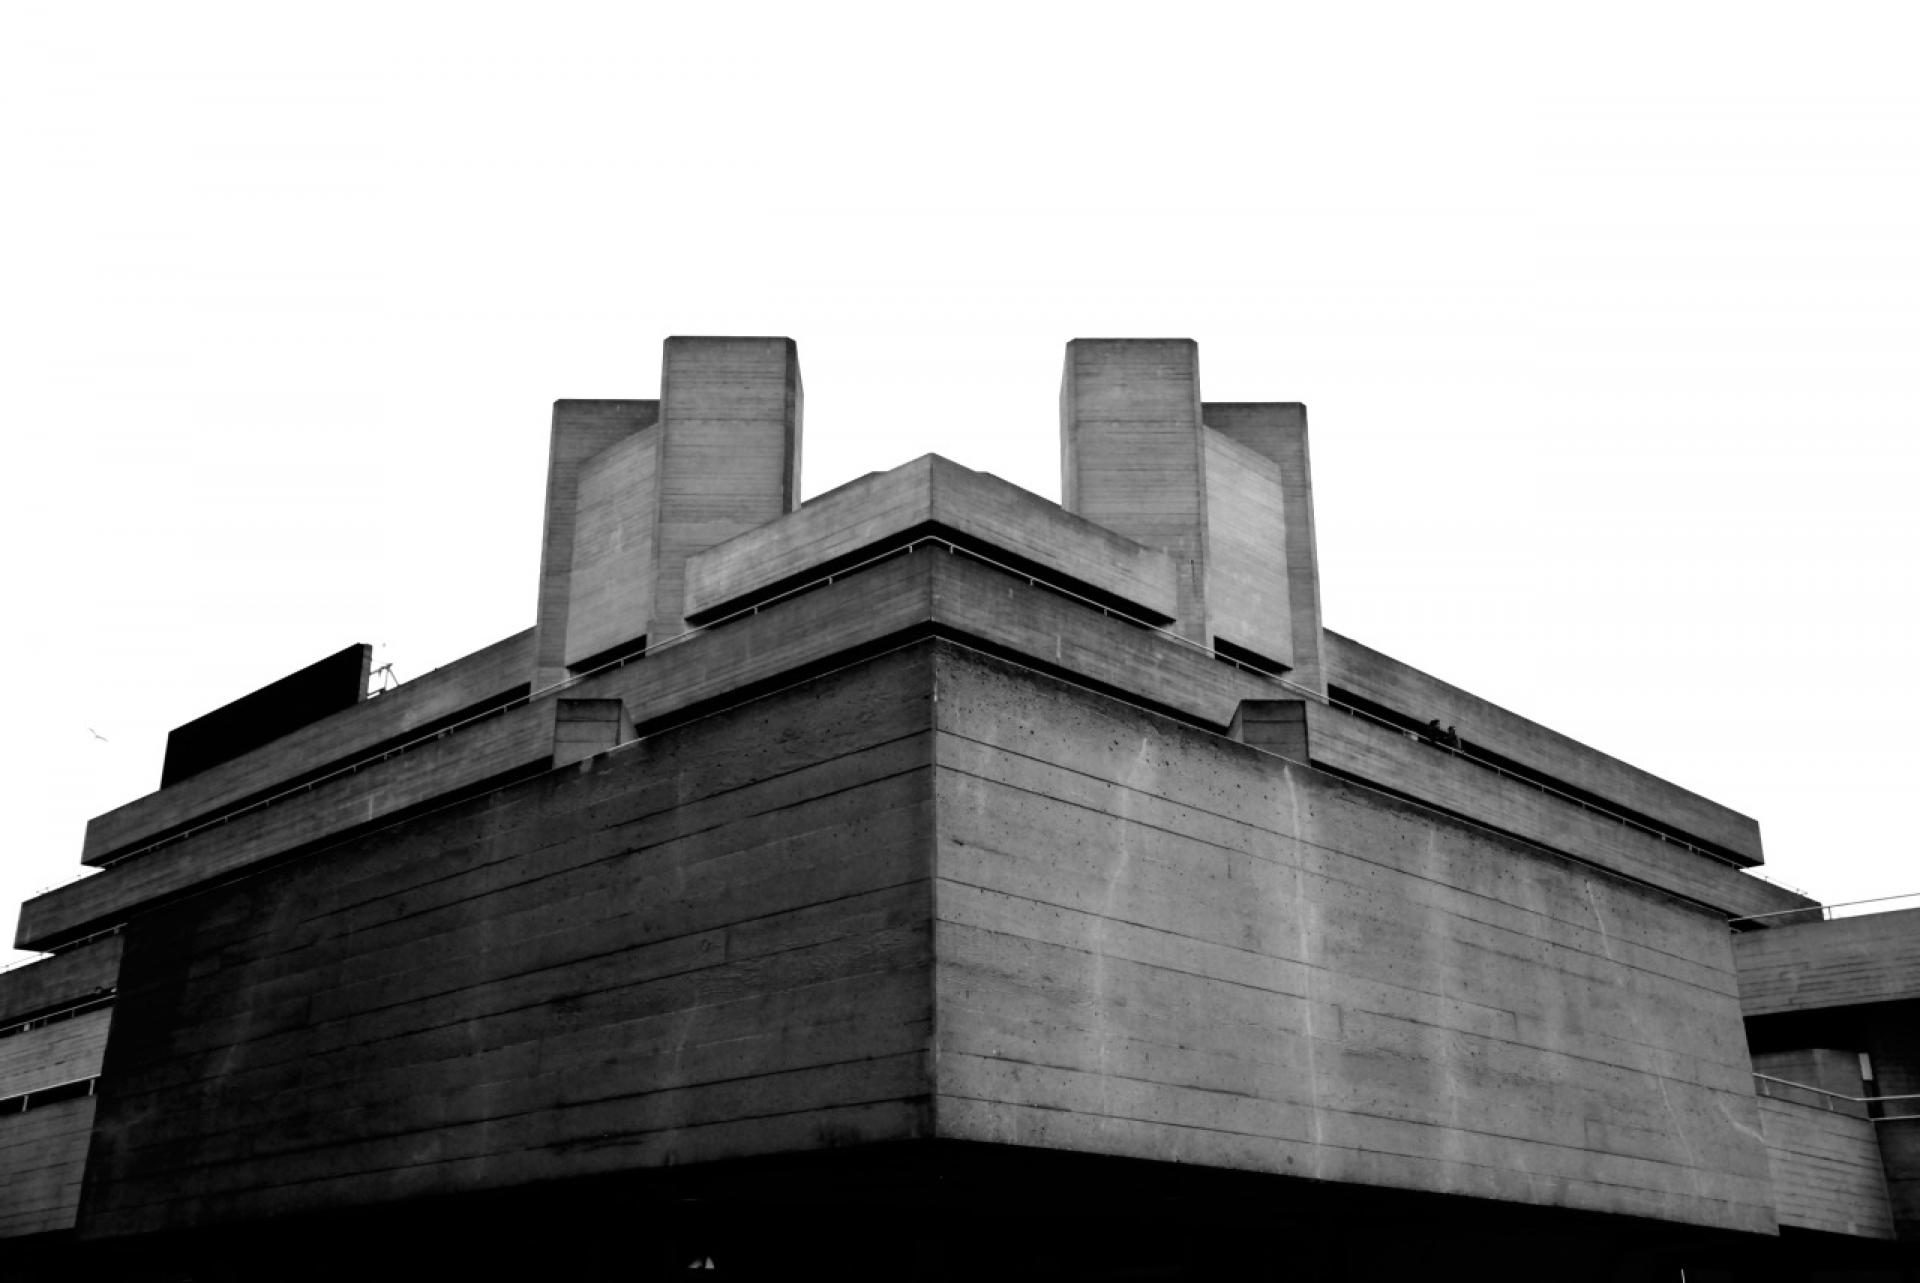 Royal National Theatre designed by Denys Lasdun (1969).